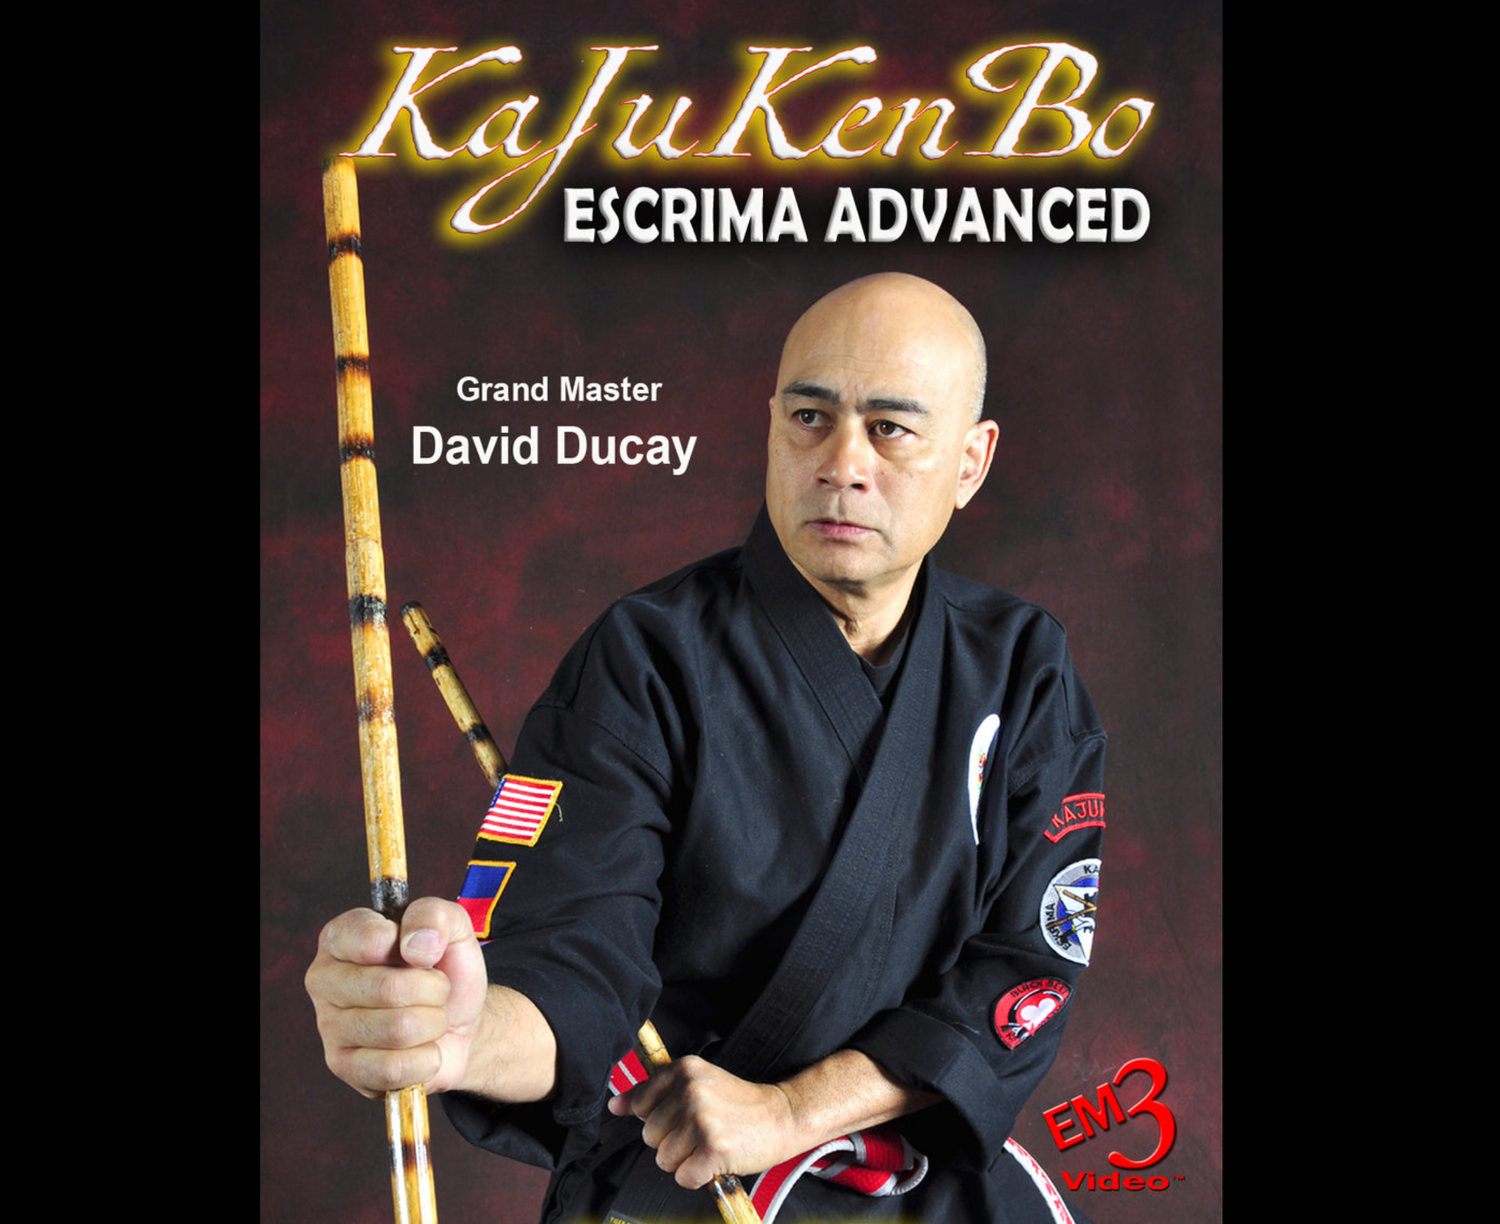 KaJuKenBo Escrima Advanced by David Ducay (オンデマンド)